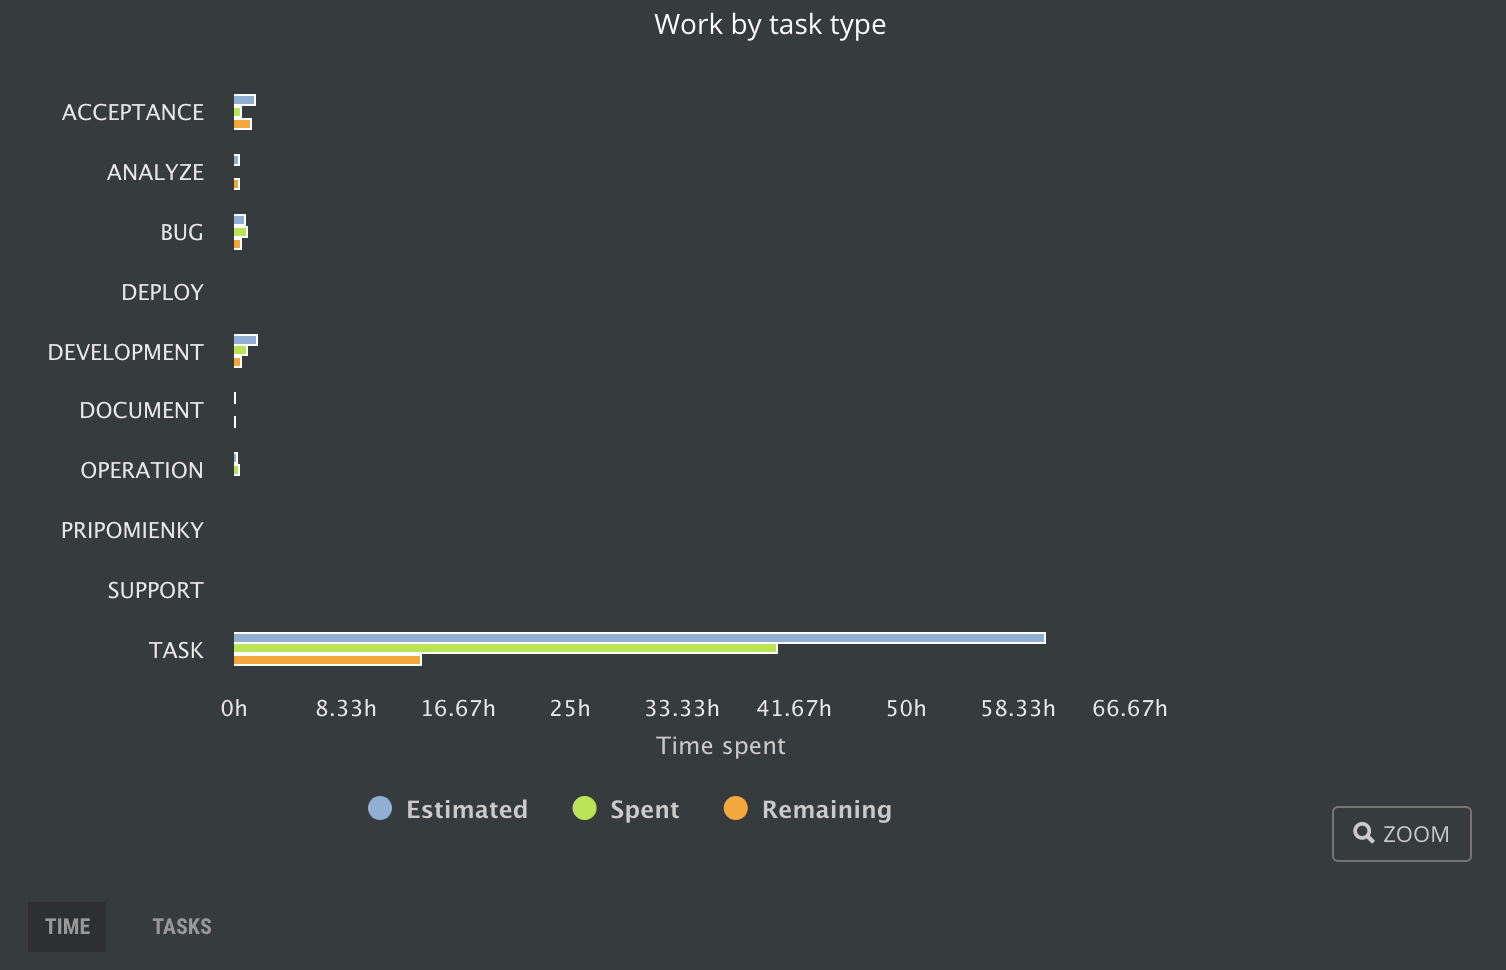 scrumdesk work by task type chart